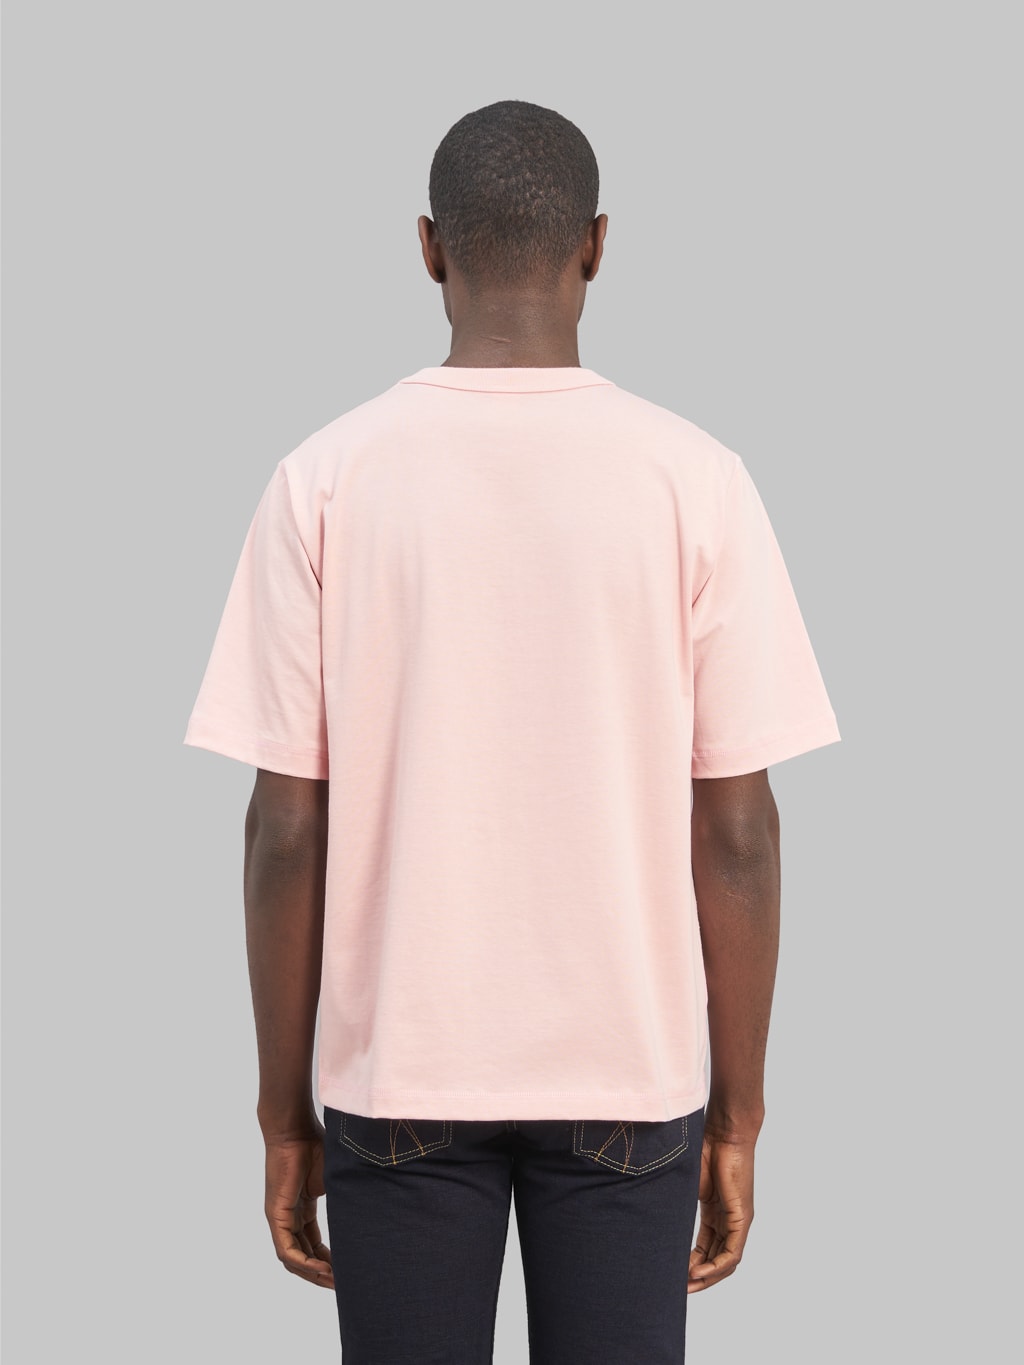 jackman grace tshirt baby pink model  back fit